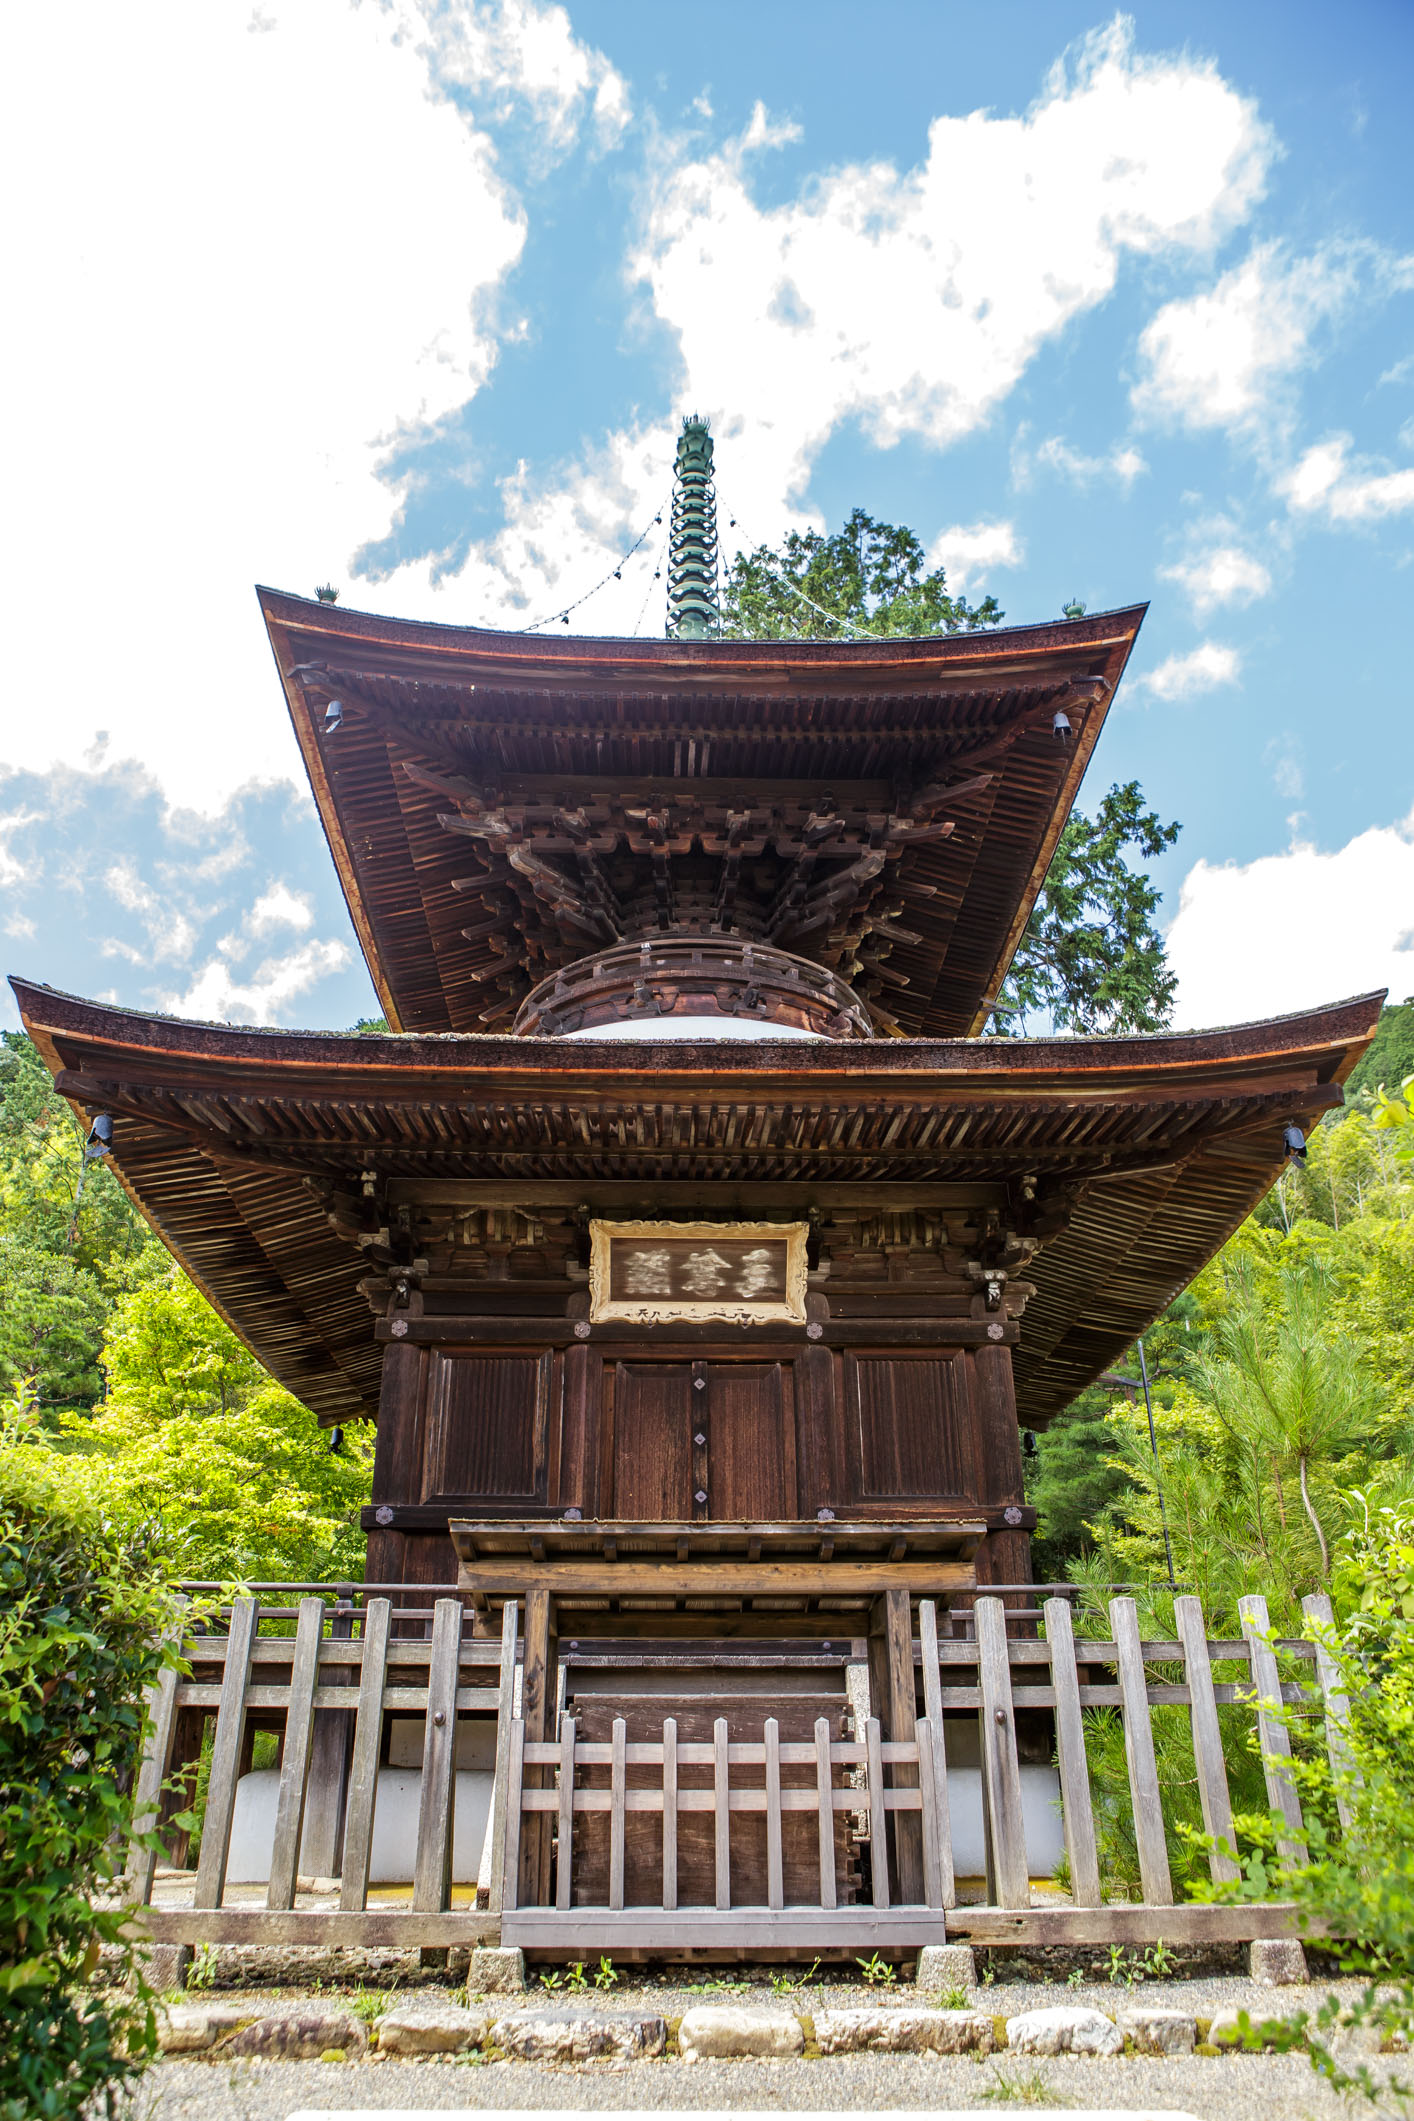 /Guewen/galeries/public/Voyages/Japon/kyoto/temples/Kyoto-temple_022.jpg